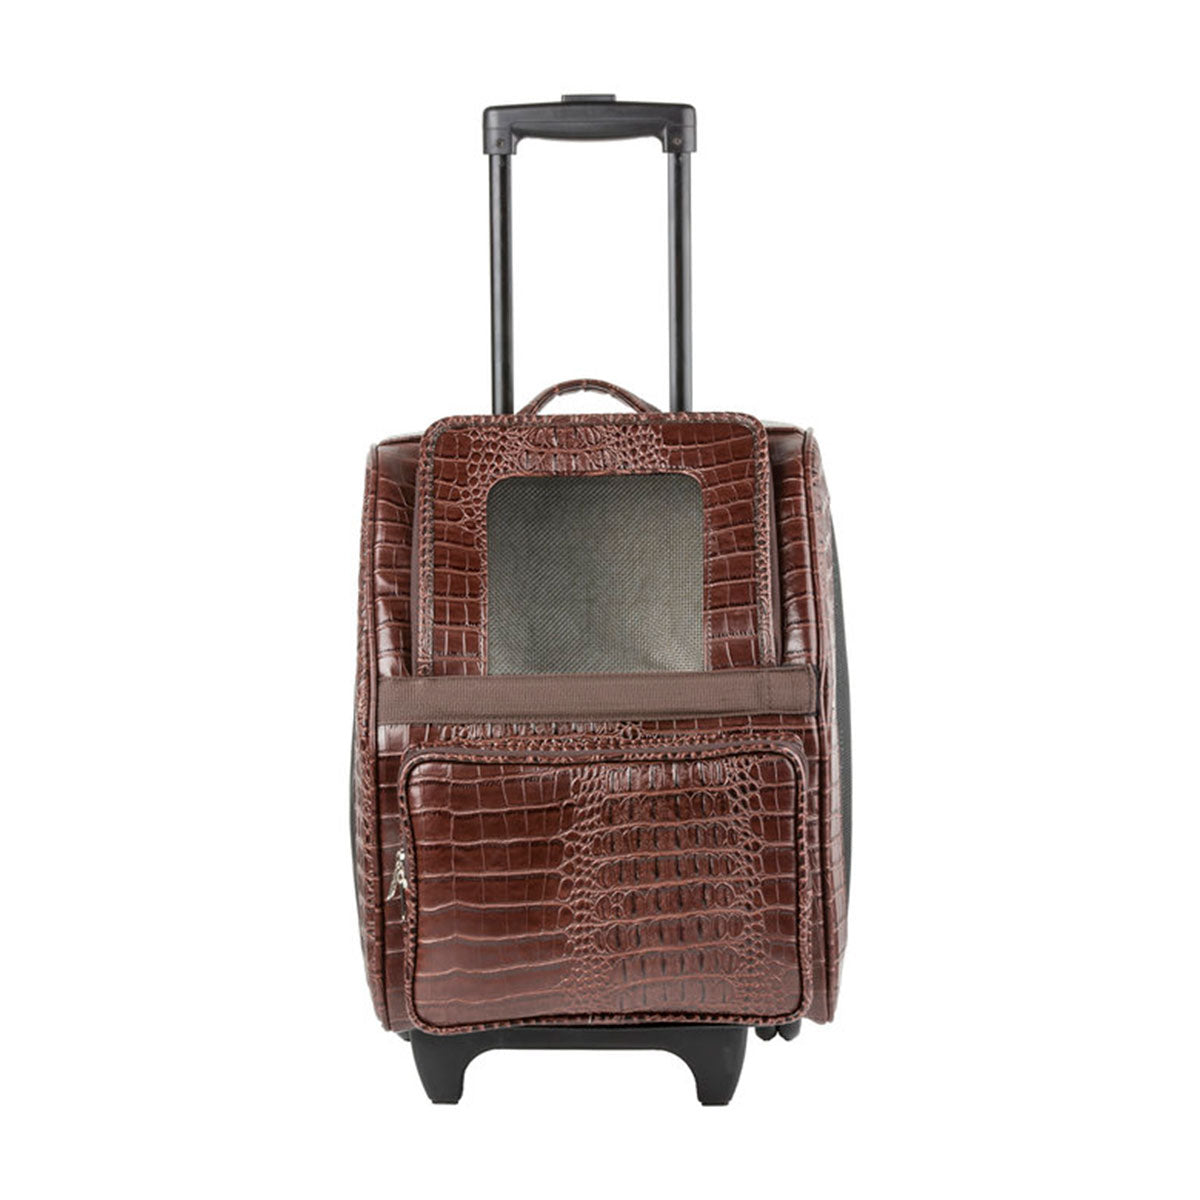 Rio Carrier Bag on Wheels - Brown Croco | Pawlicious & Company